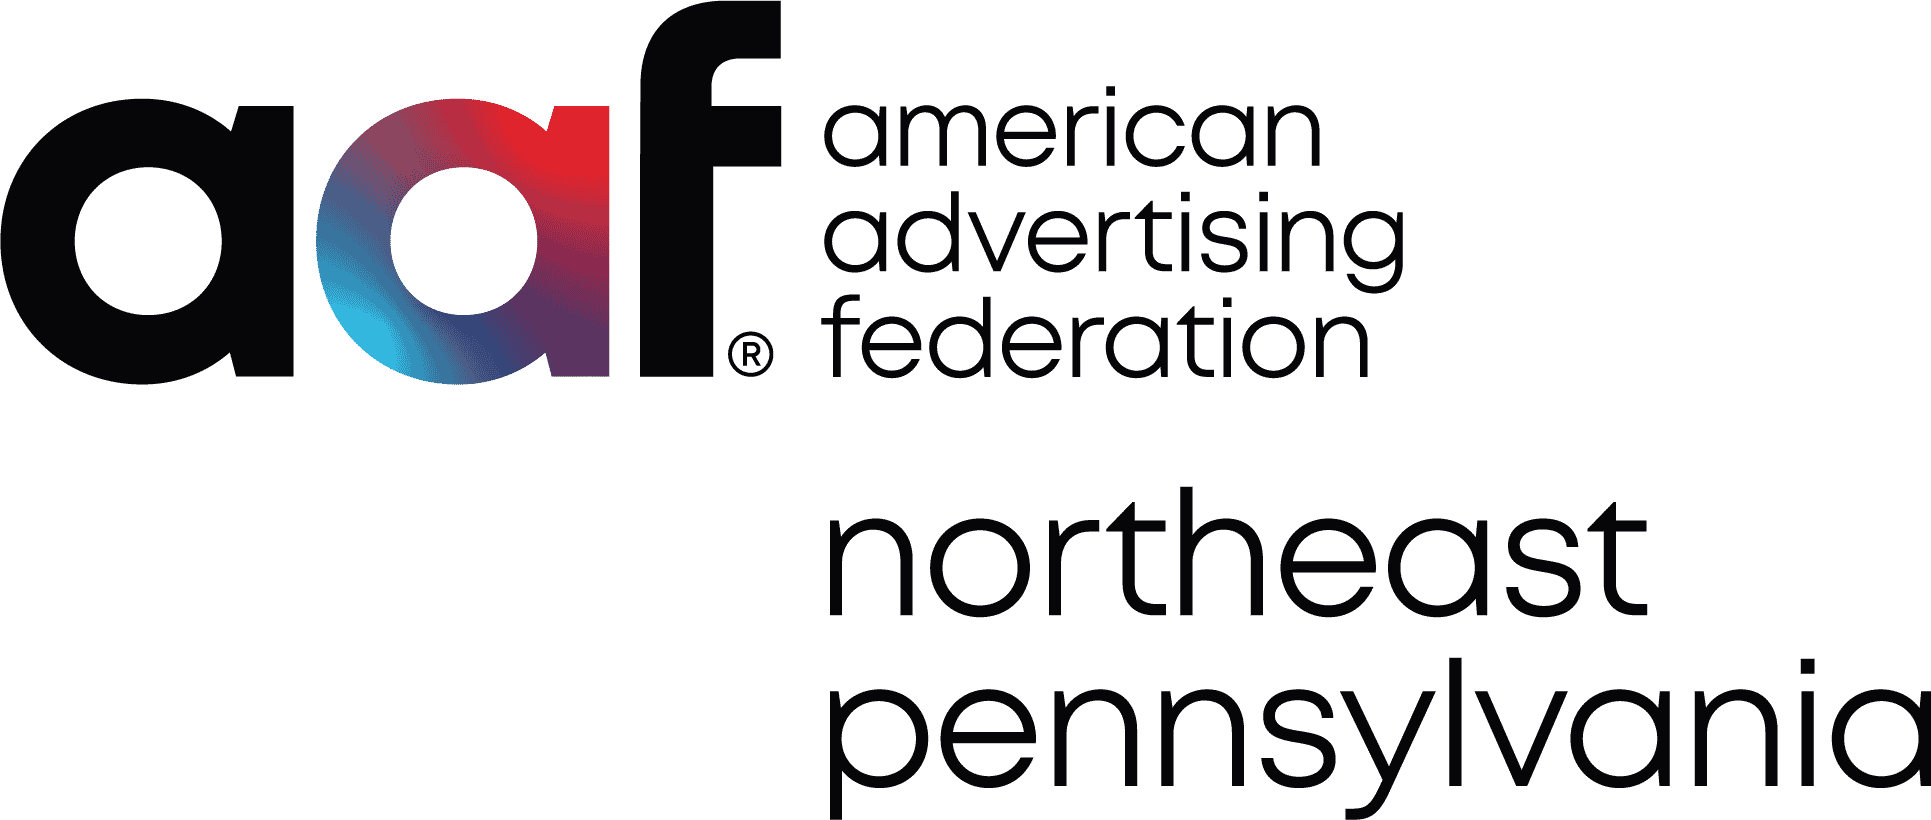 American Advertising Federation partner